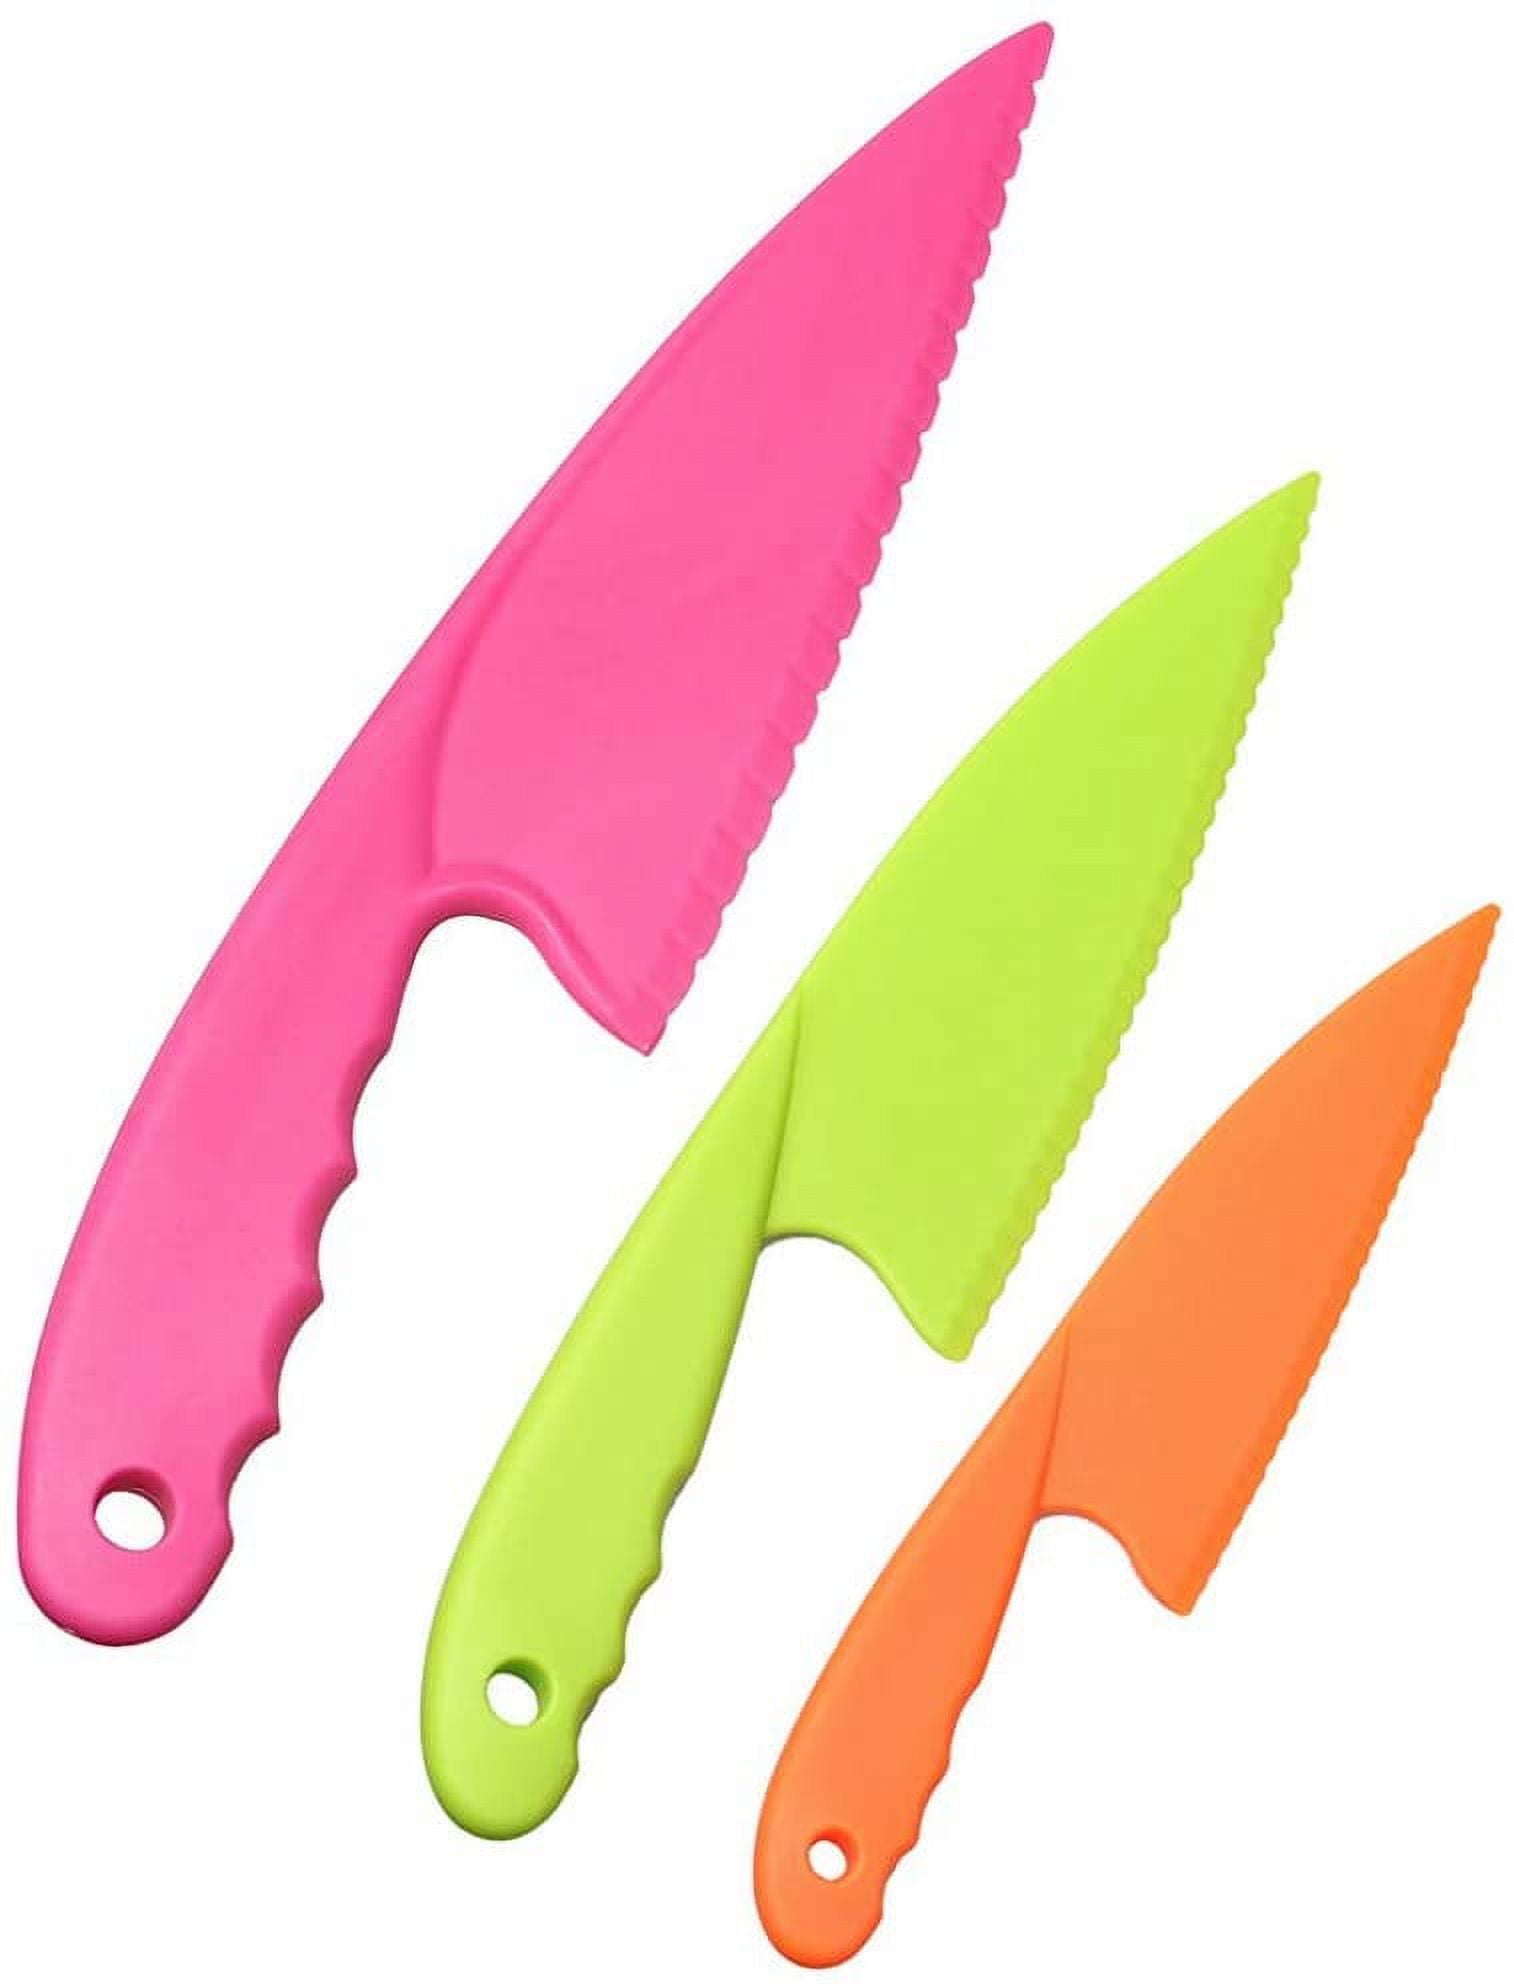 Kitchenkids Kids Knife Set of 3 - Firm Grip, Serrated Edges & Safe – Colorful Nylon Toddler Knife Set to Cut Fruits, Salad, Cake, Lettuce (Purple